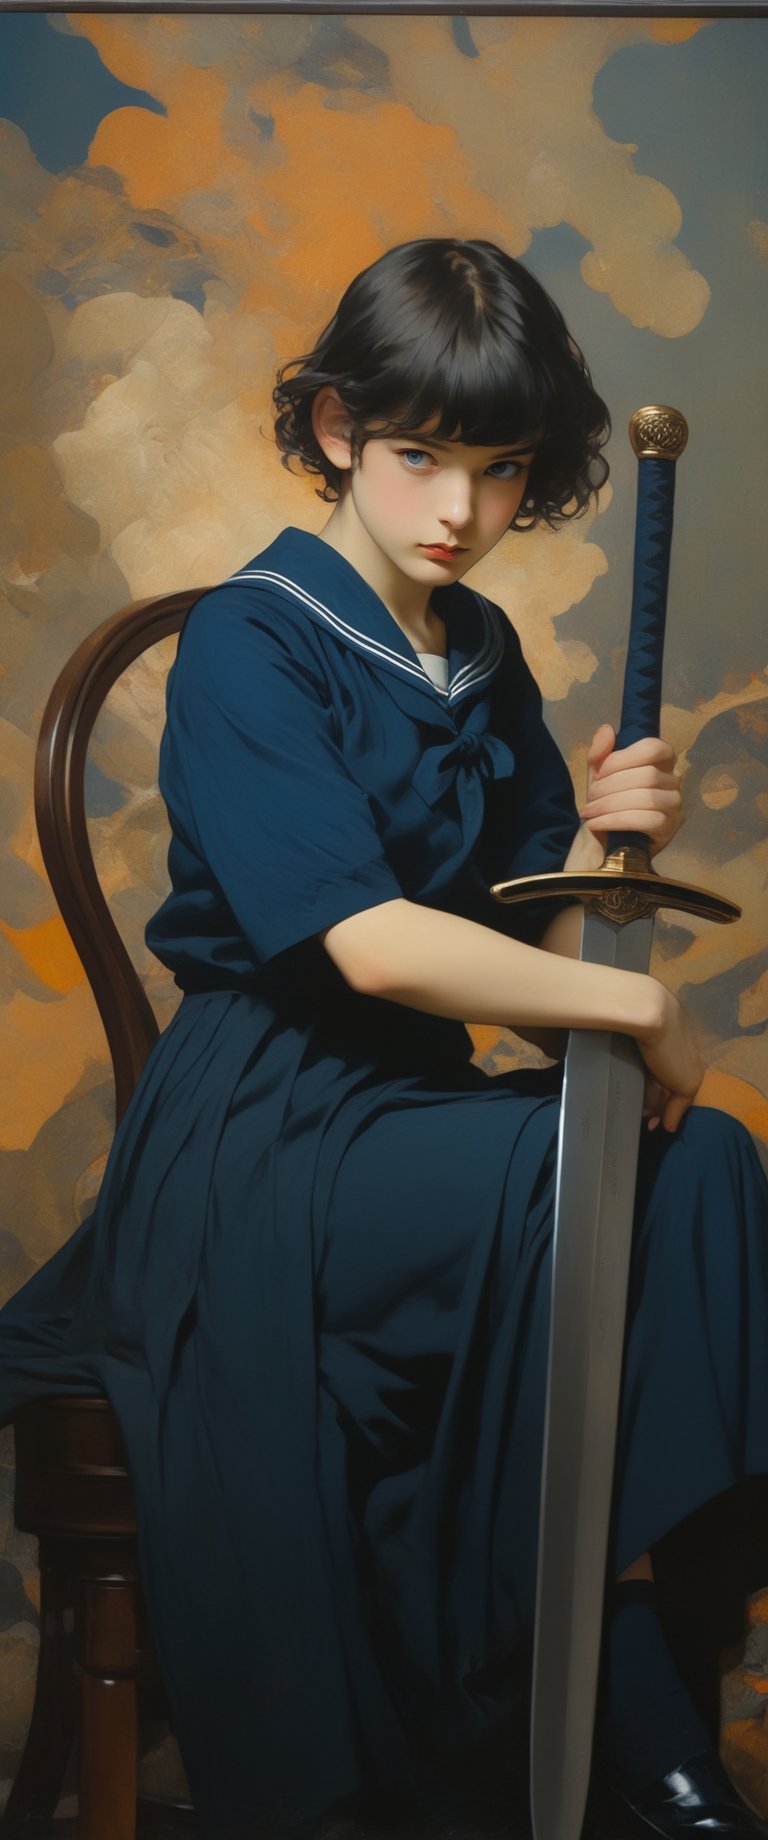 dark blue sailor school uniform, sitting in a chair holding a sword, short hair, masterpiece, absurdes, chiarosaurio, mucha, sexy pose, tense athmosfere, detailed background,